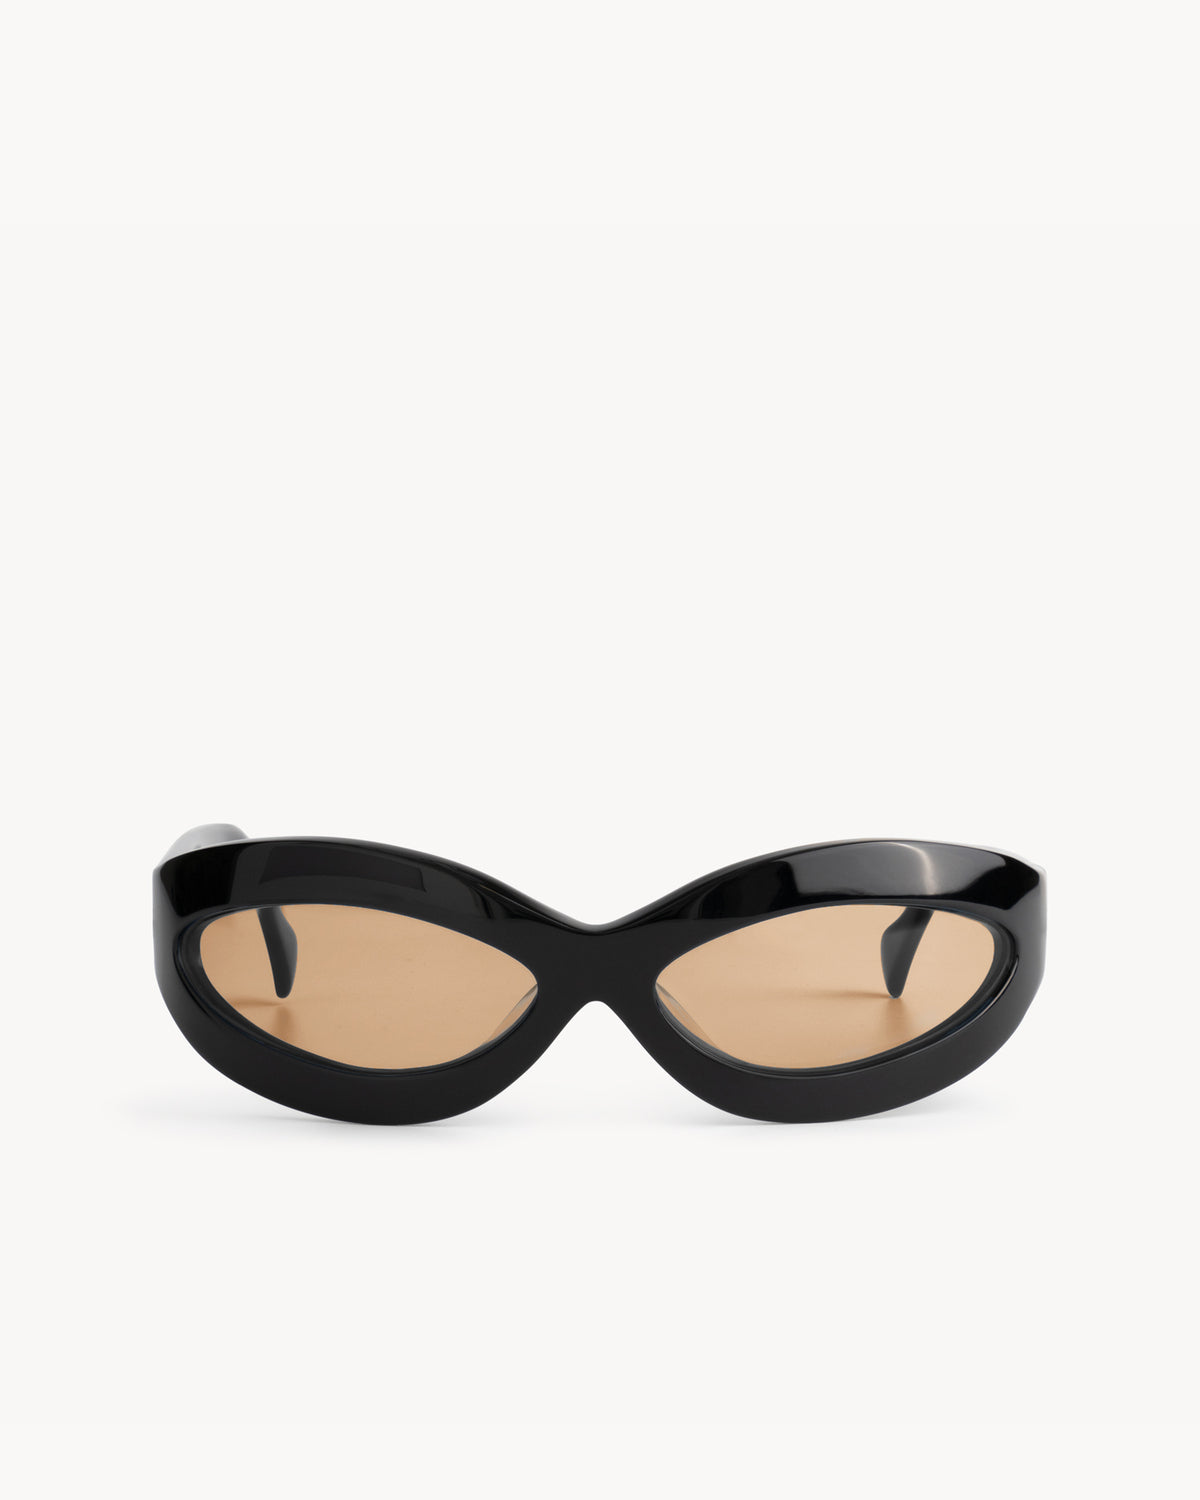 Port Tanger Summa Sunglasses in Black Acetate and Amber Lenses 1